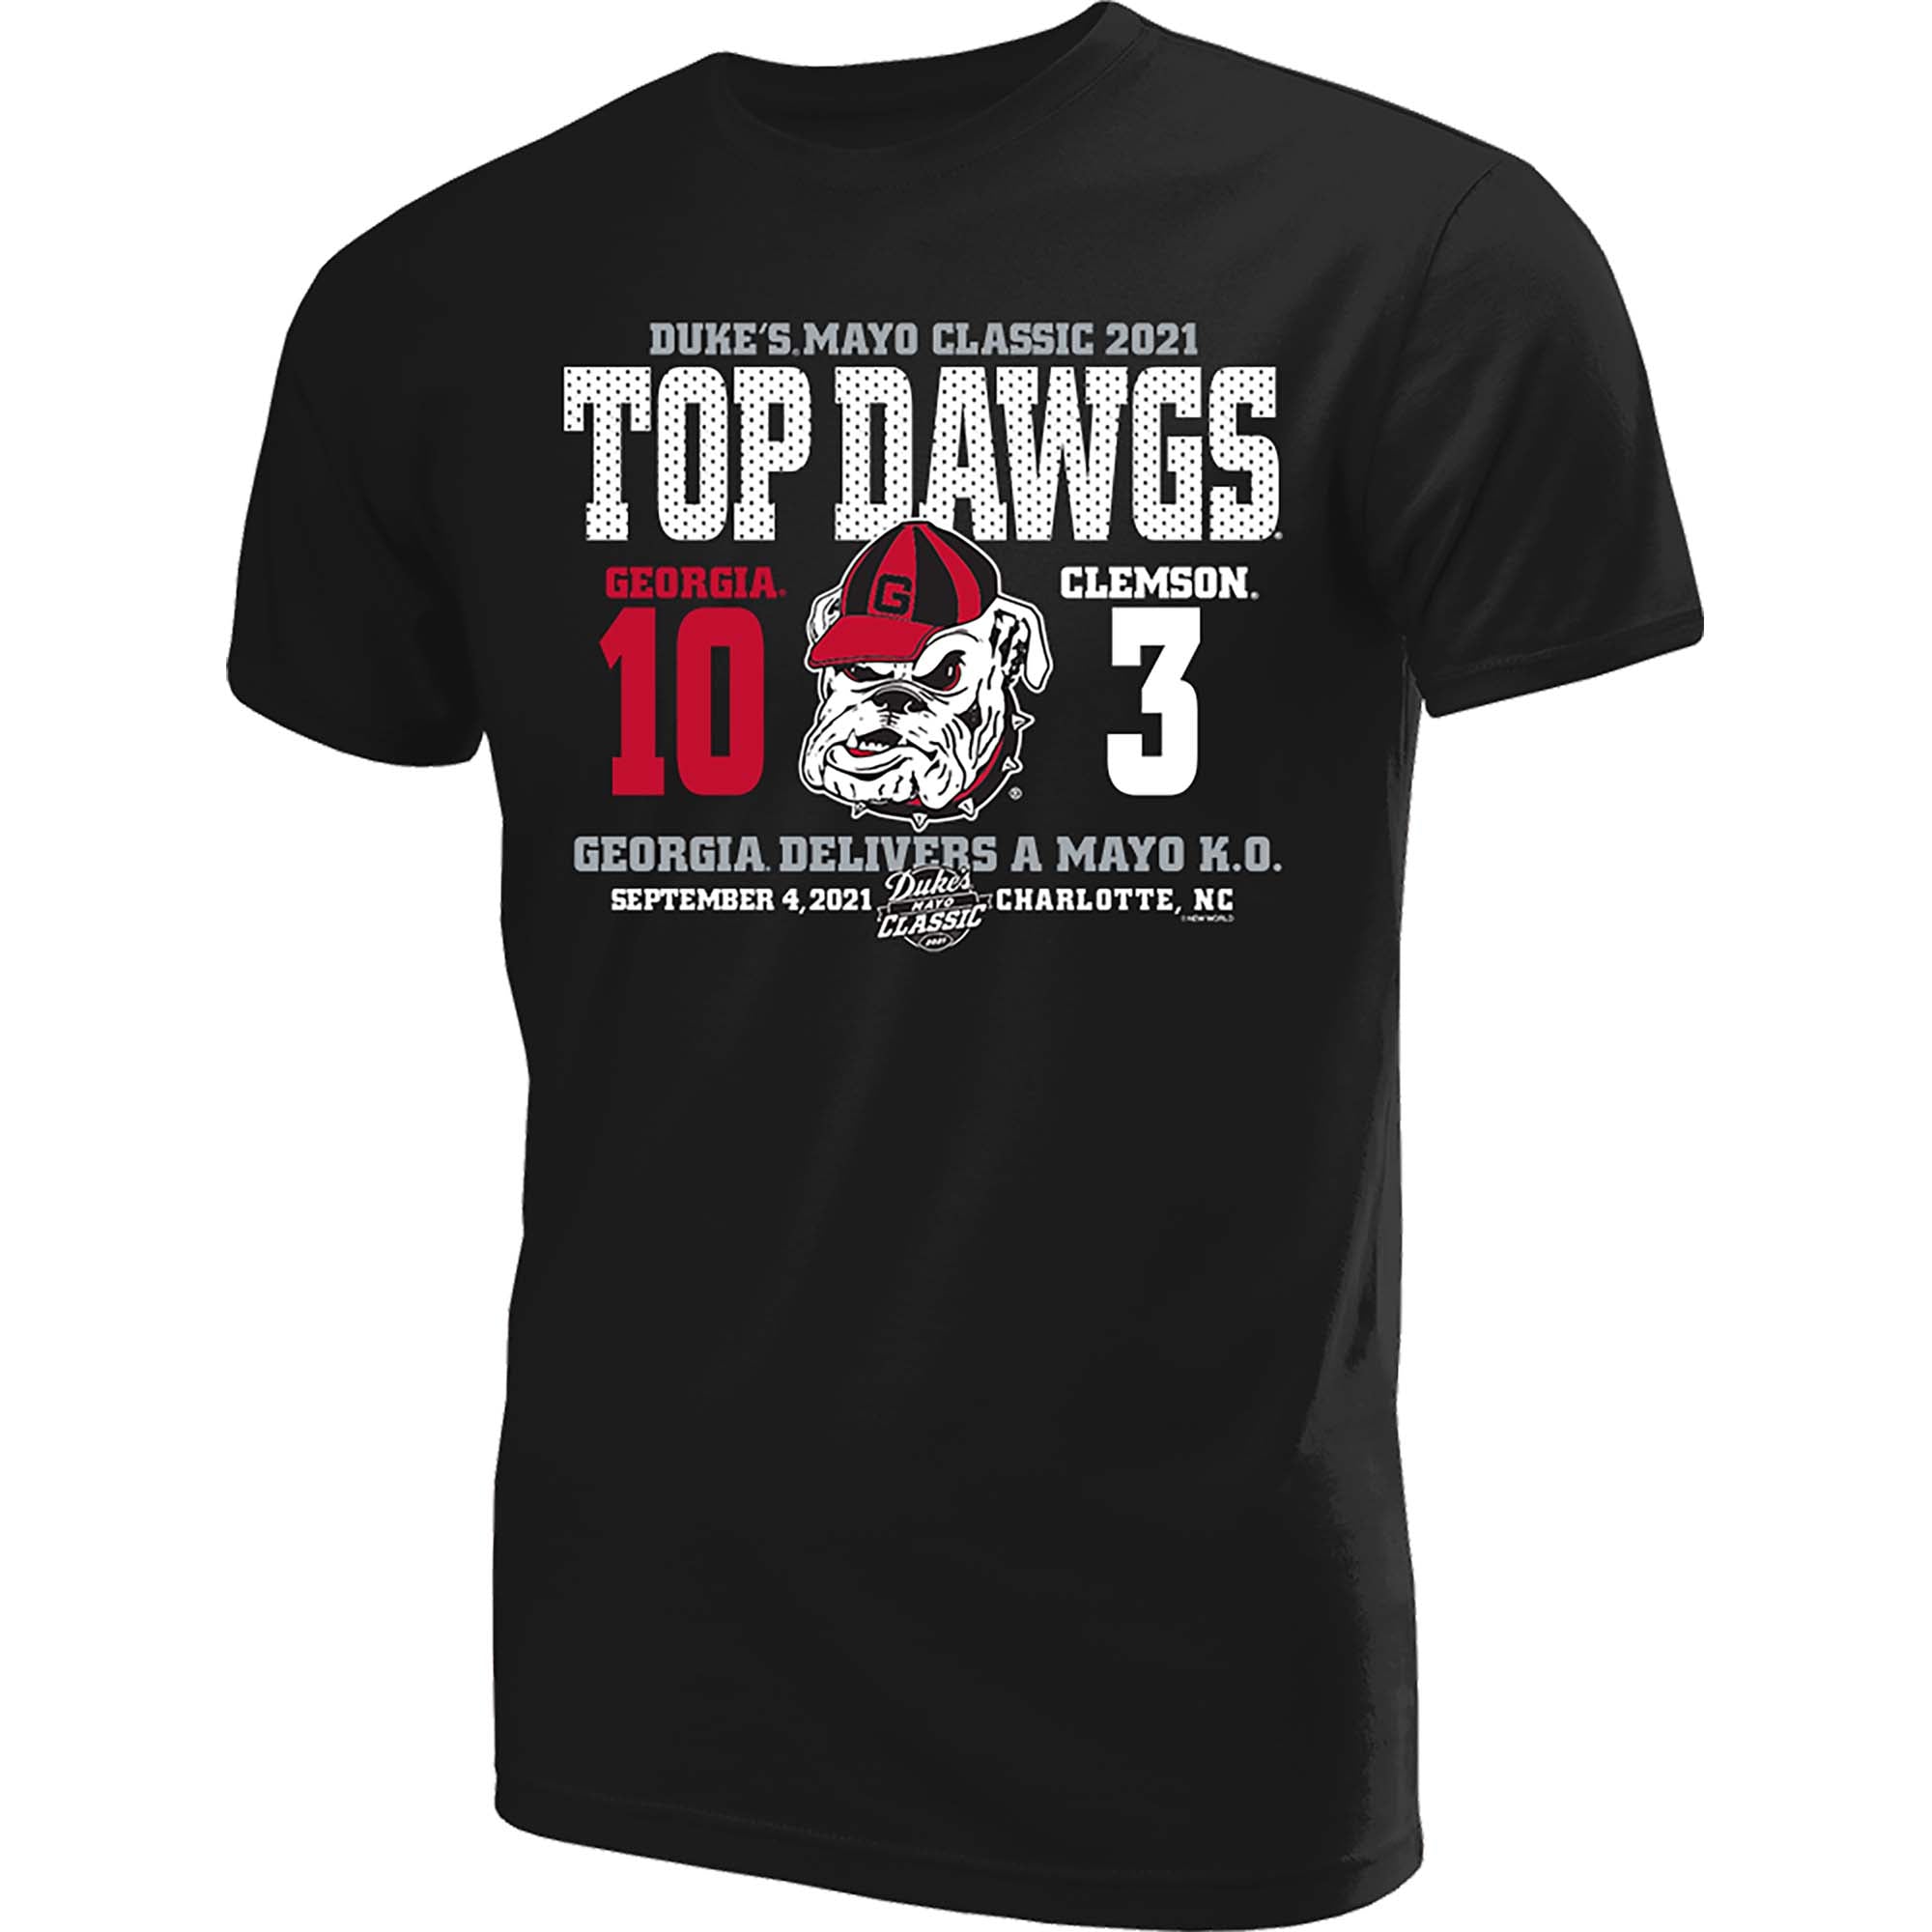 Dawgs 10 - Clemson 3 (Licensed Score Shirt)